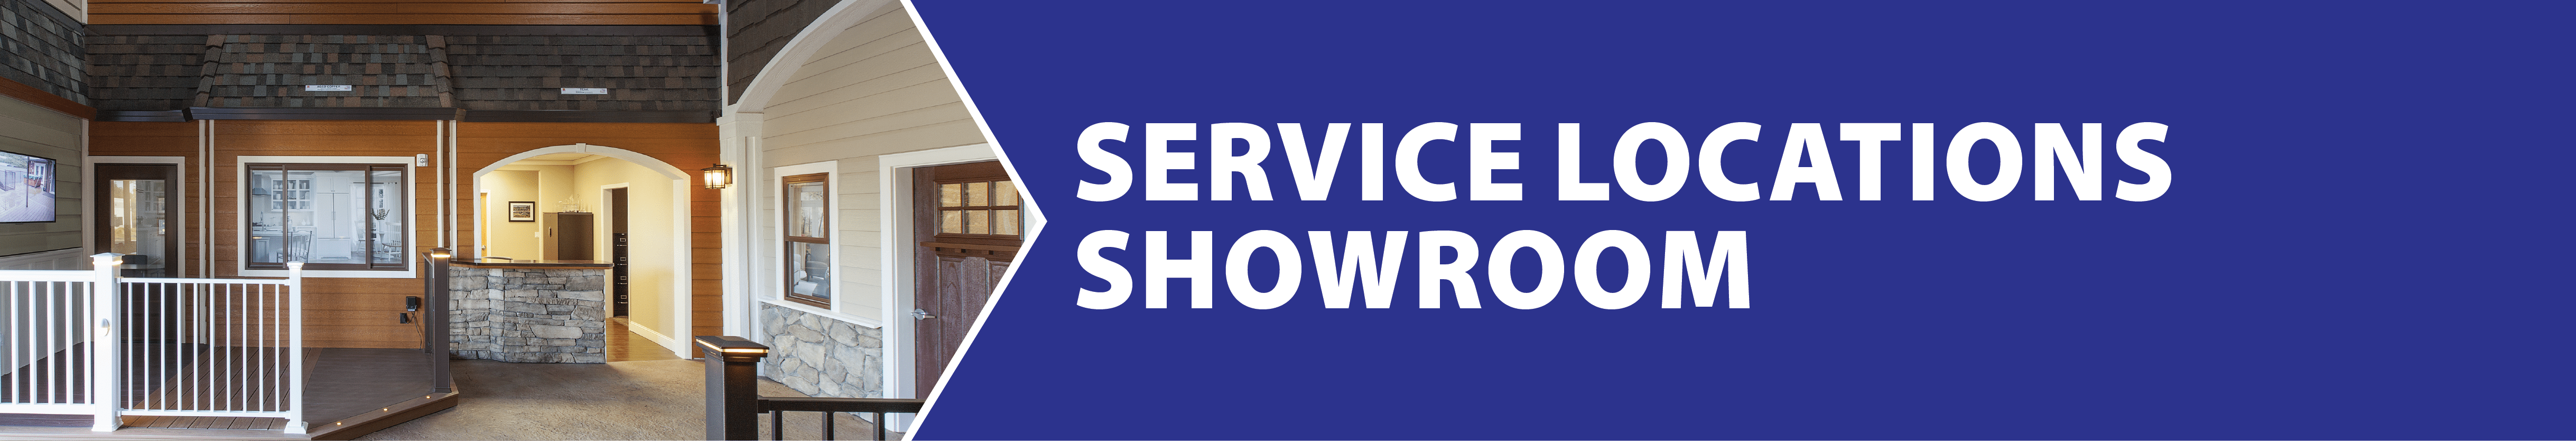 Service Locations Showroom